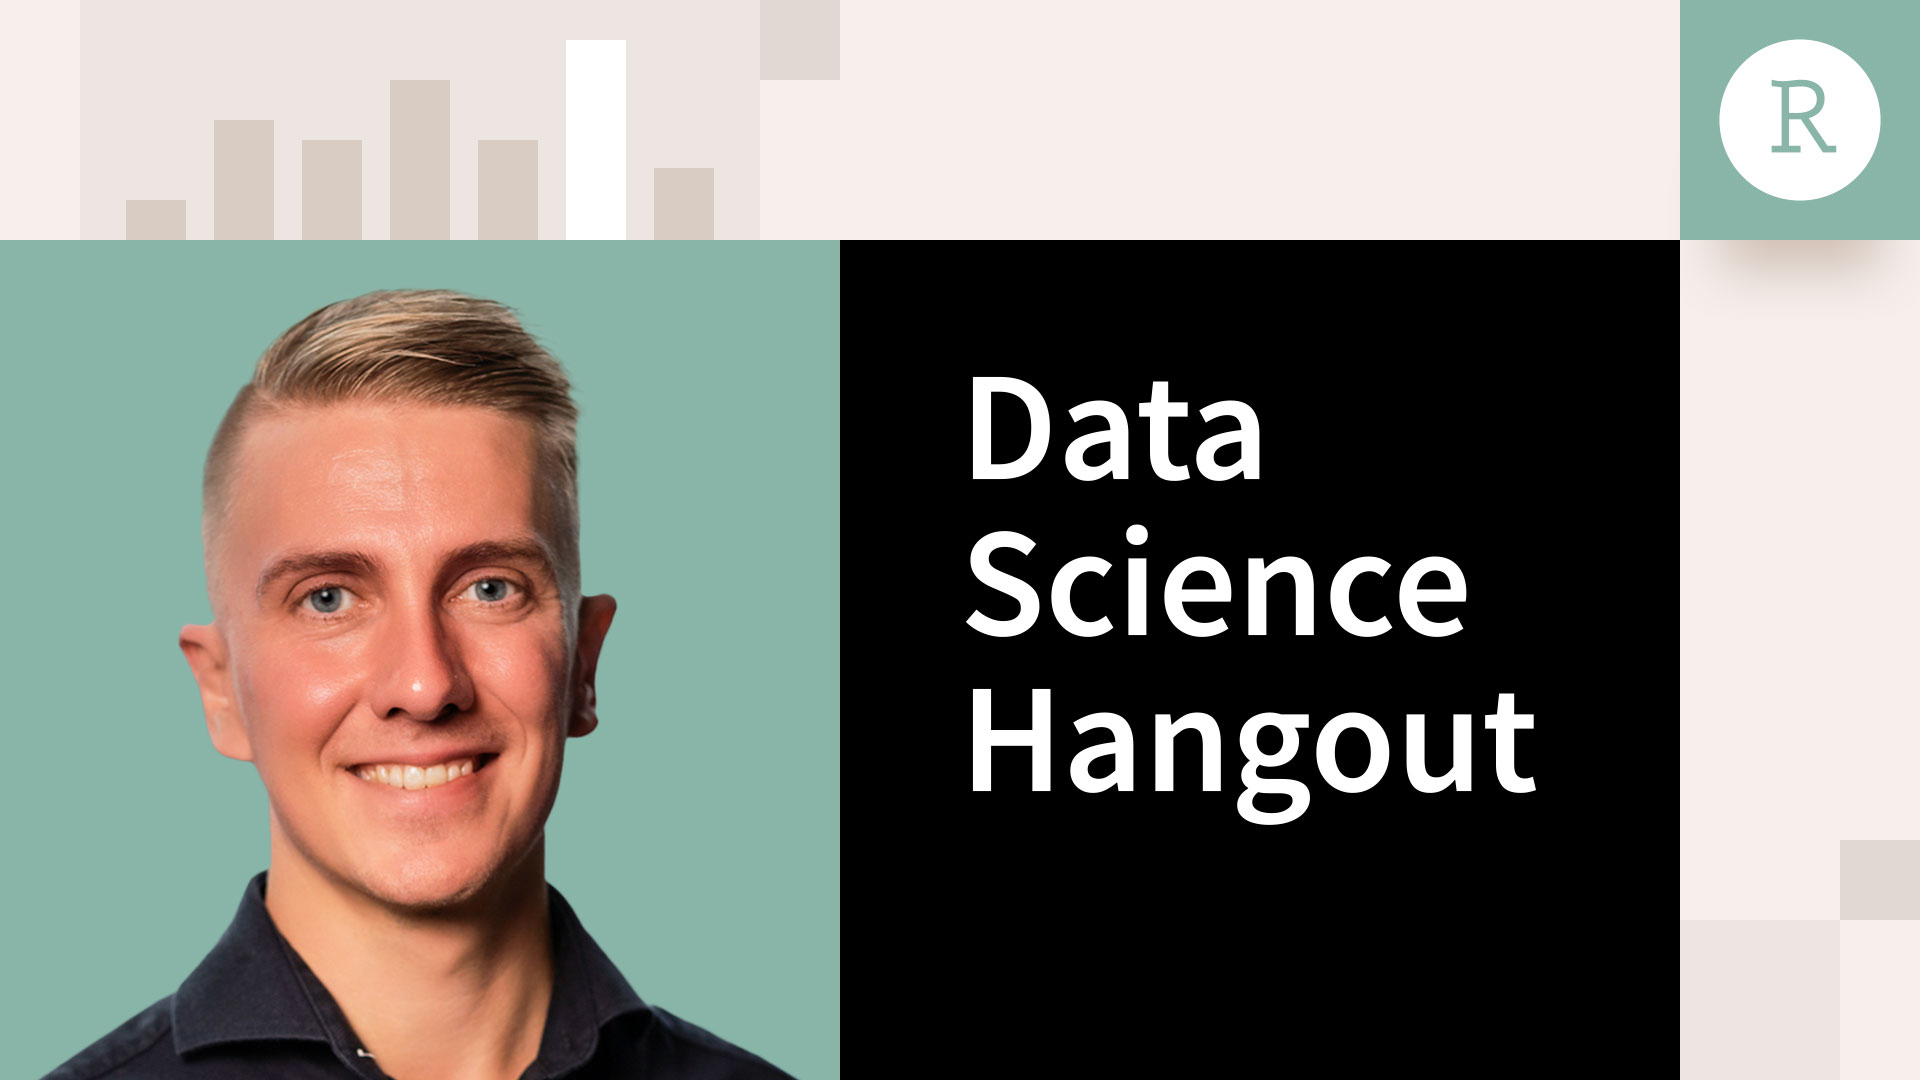 Data Science Hangout - City of Reykjavik